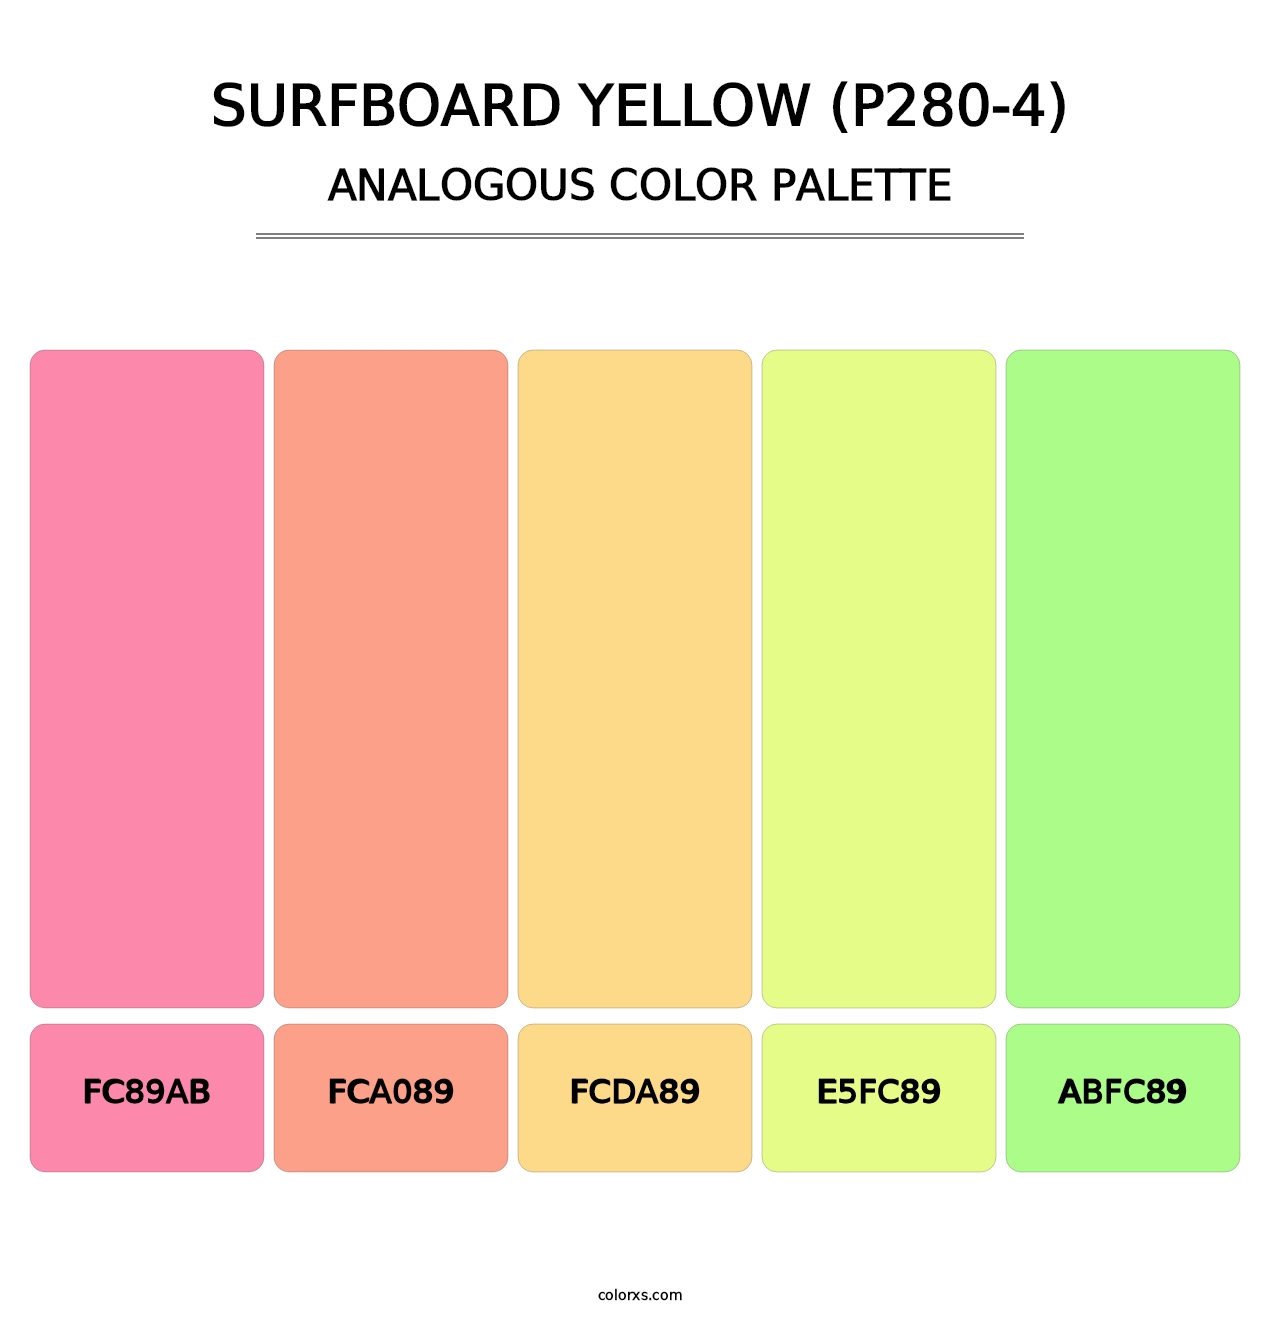 Surfboard Yellow (P280-4) - Analogous Color Palette